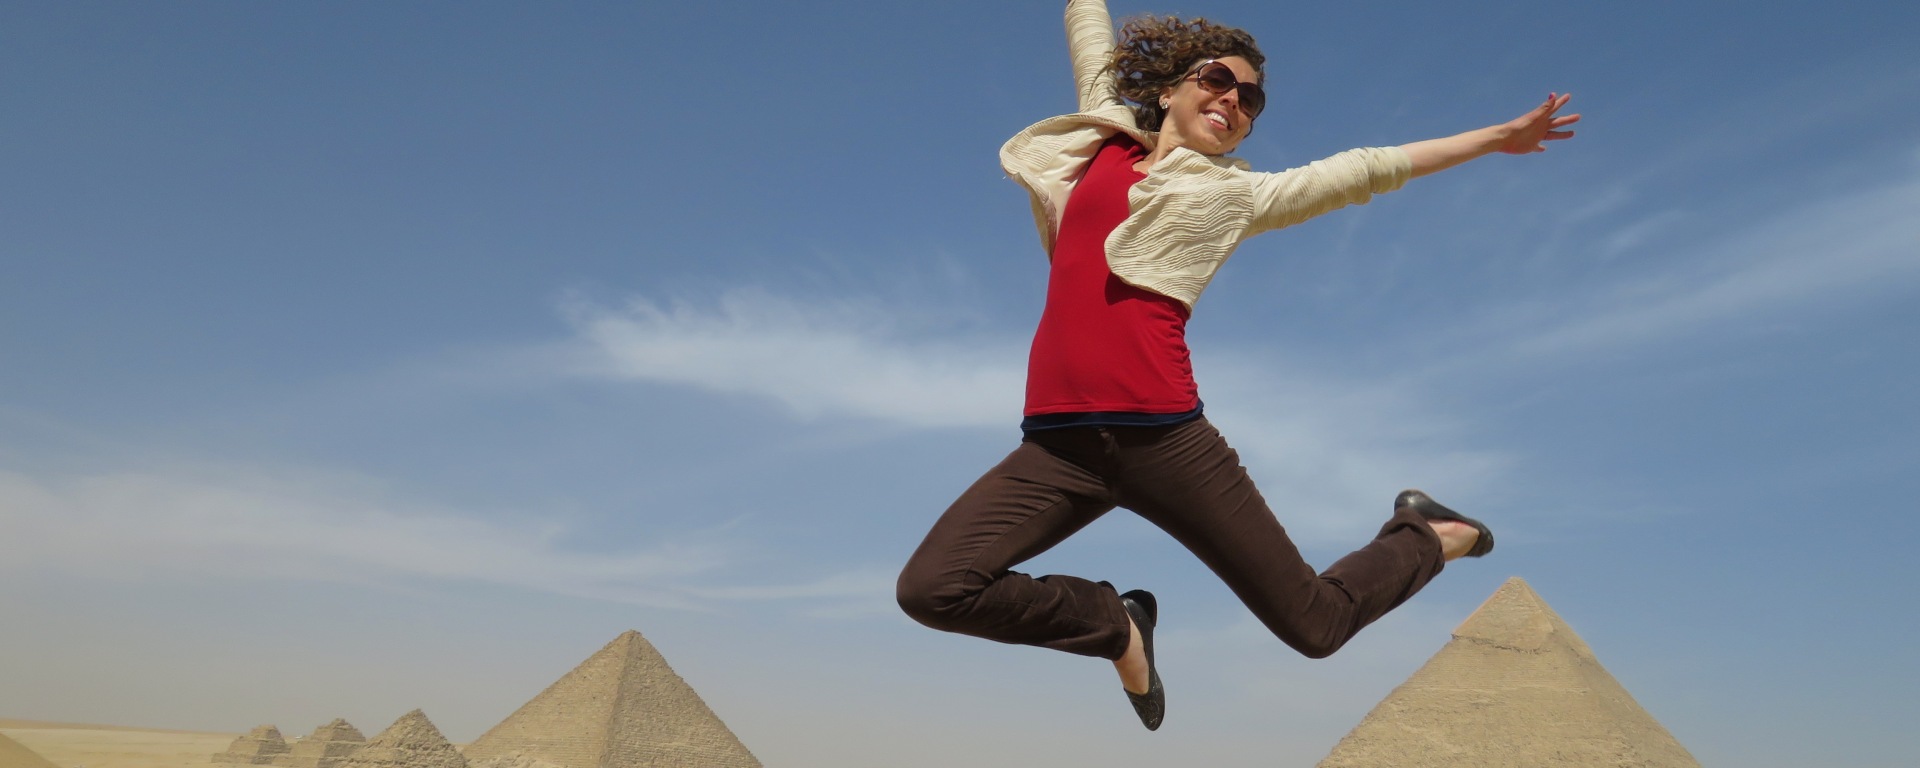 Anika Mikkelson - Jumping at the Pyramids of Giza, Egypt - www.MissMaps.com